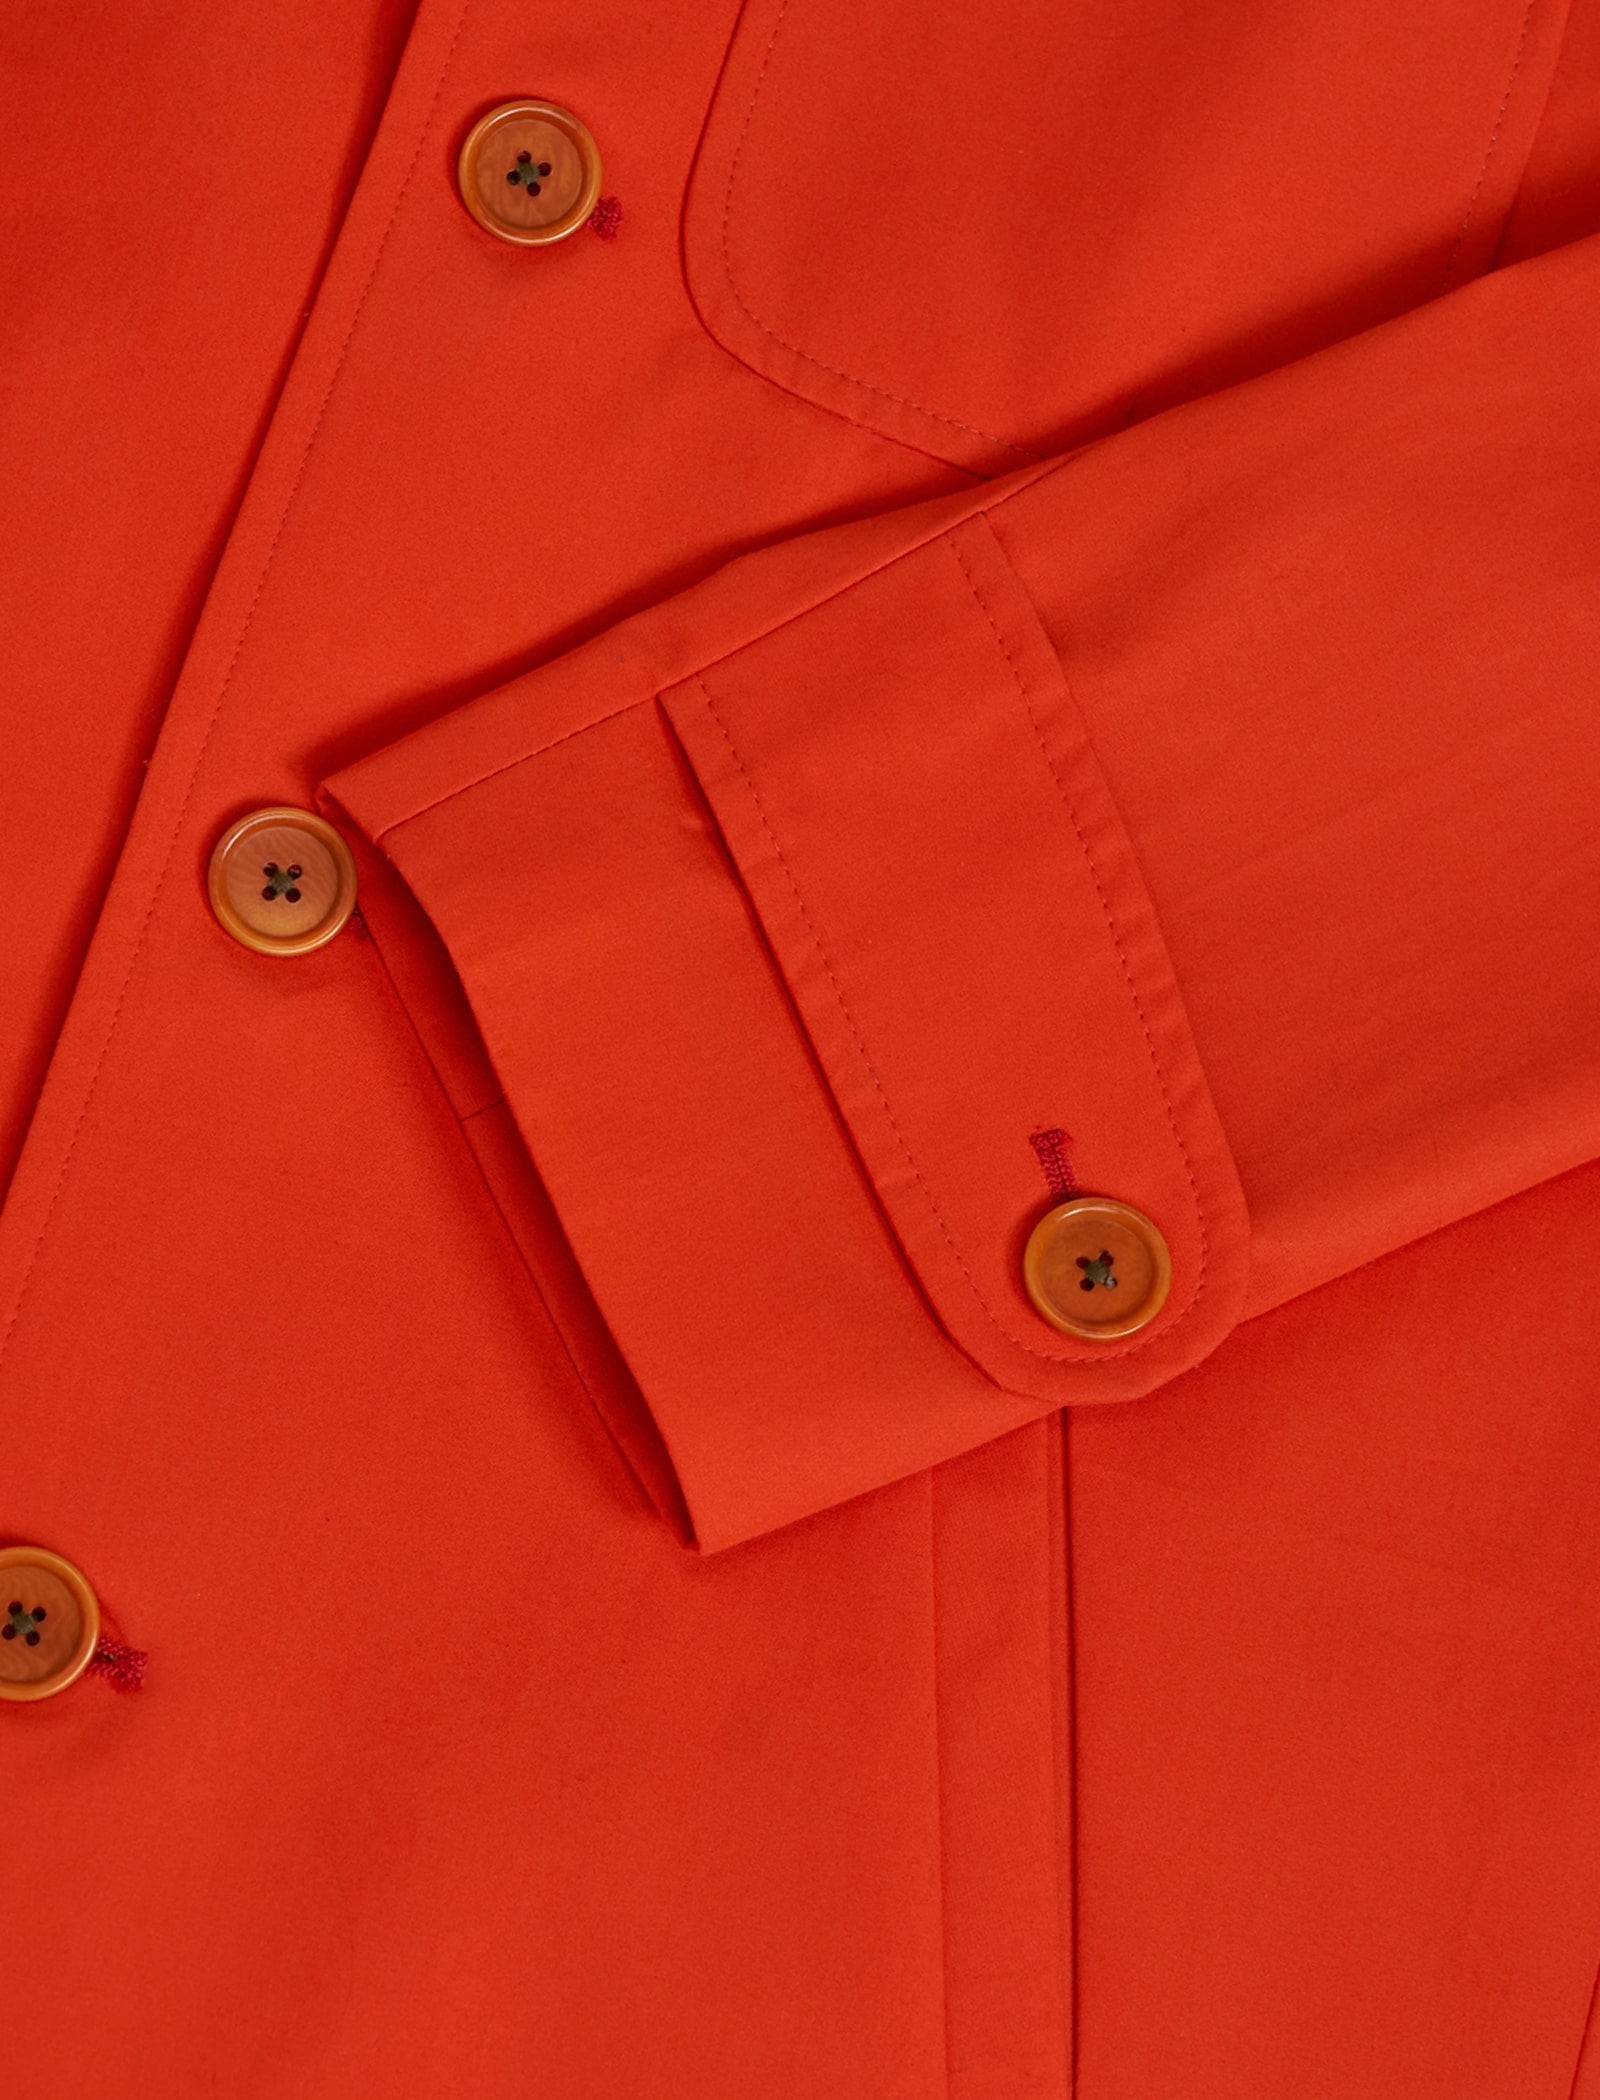 Orange Ventile Cotton Long Overcoat